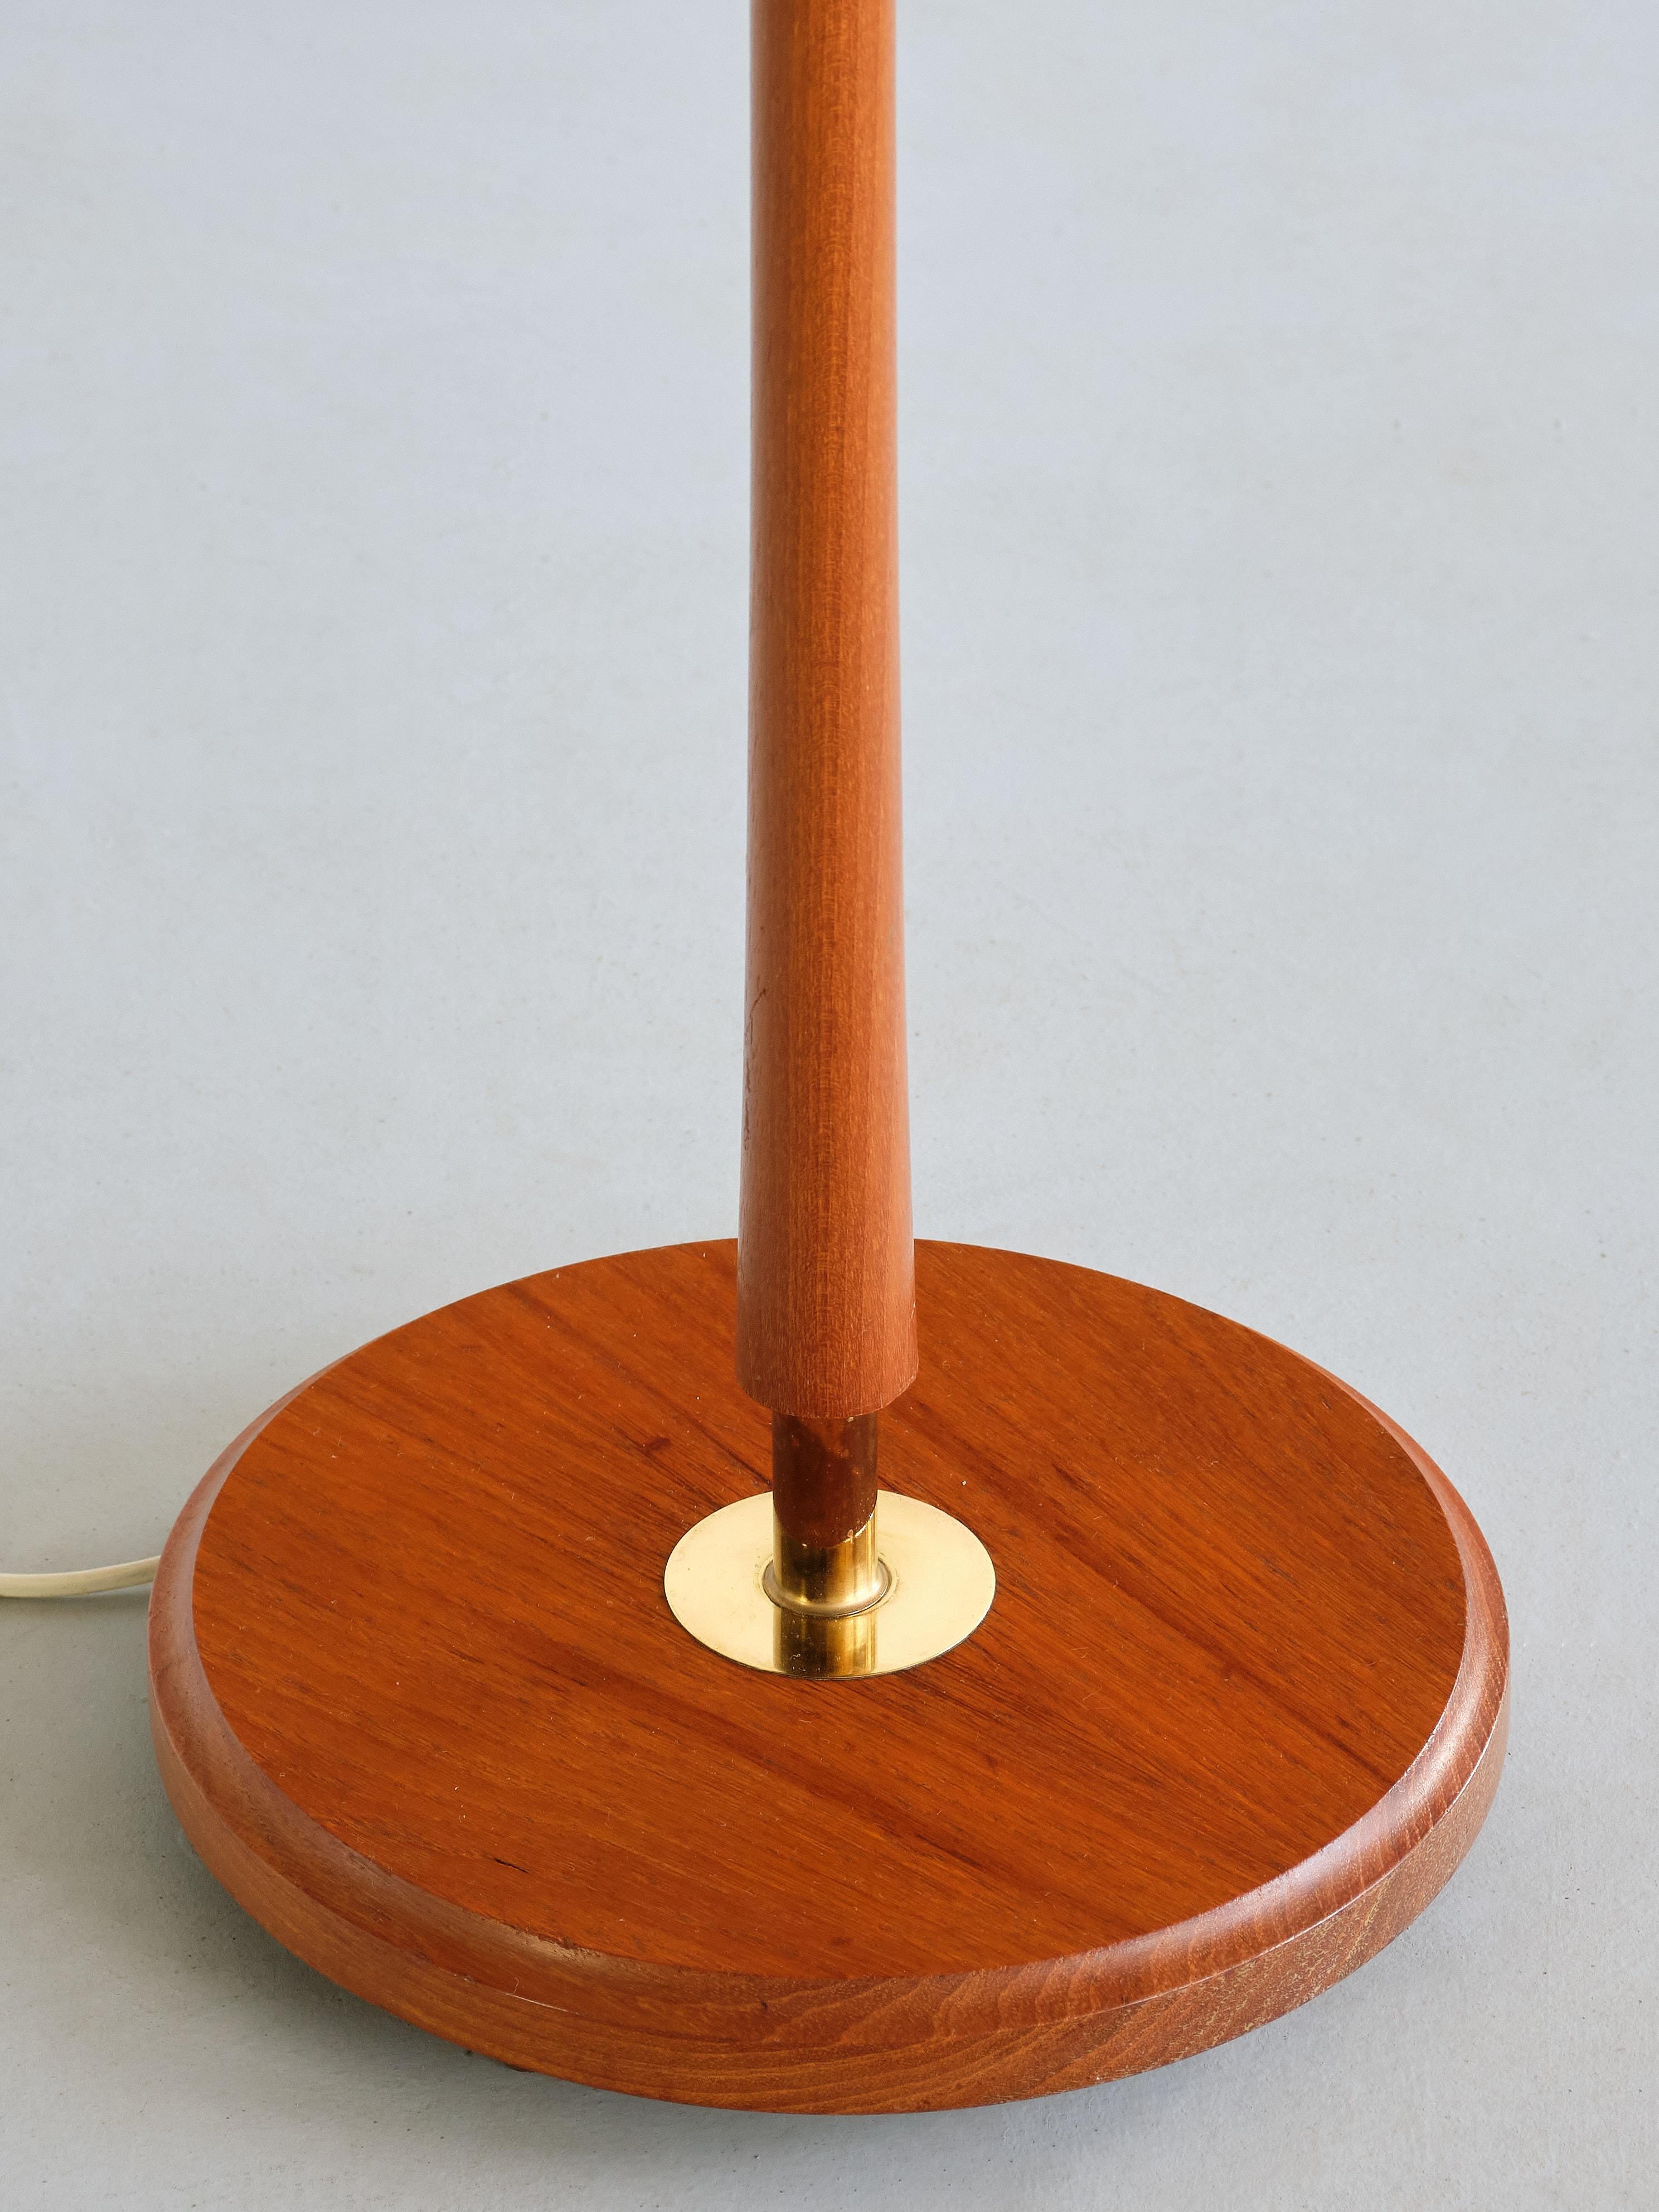 Örsjö Armatur Teak and Brass Floor Lamp with Josef Frank Shade, Sweden, 1950s For Sale 4